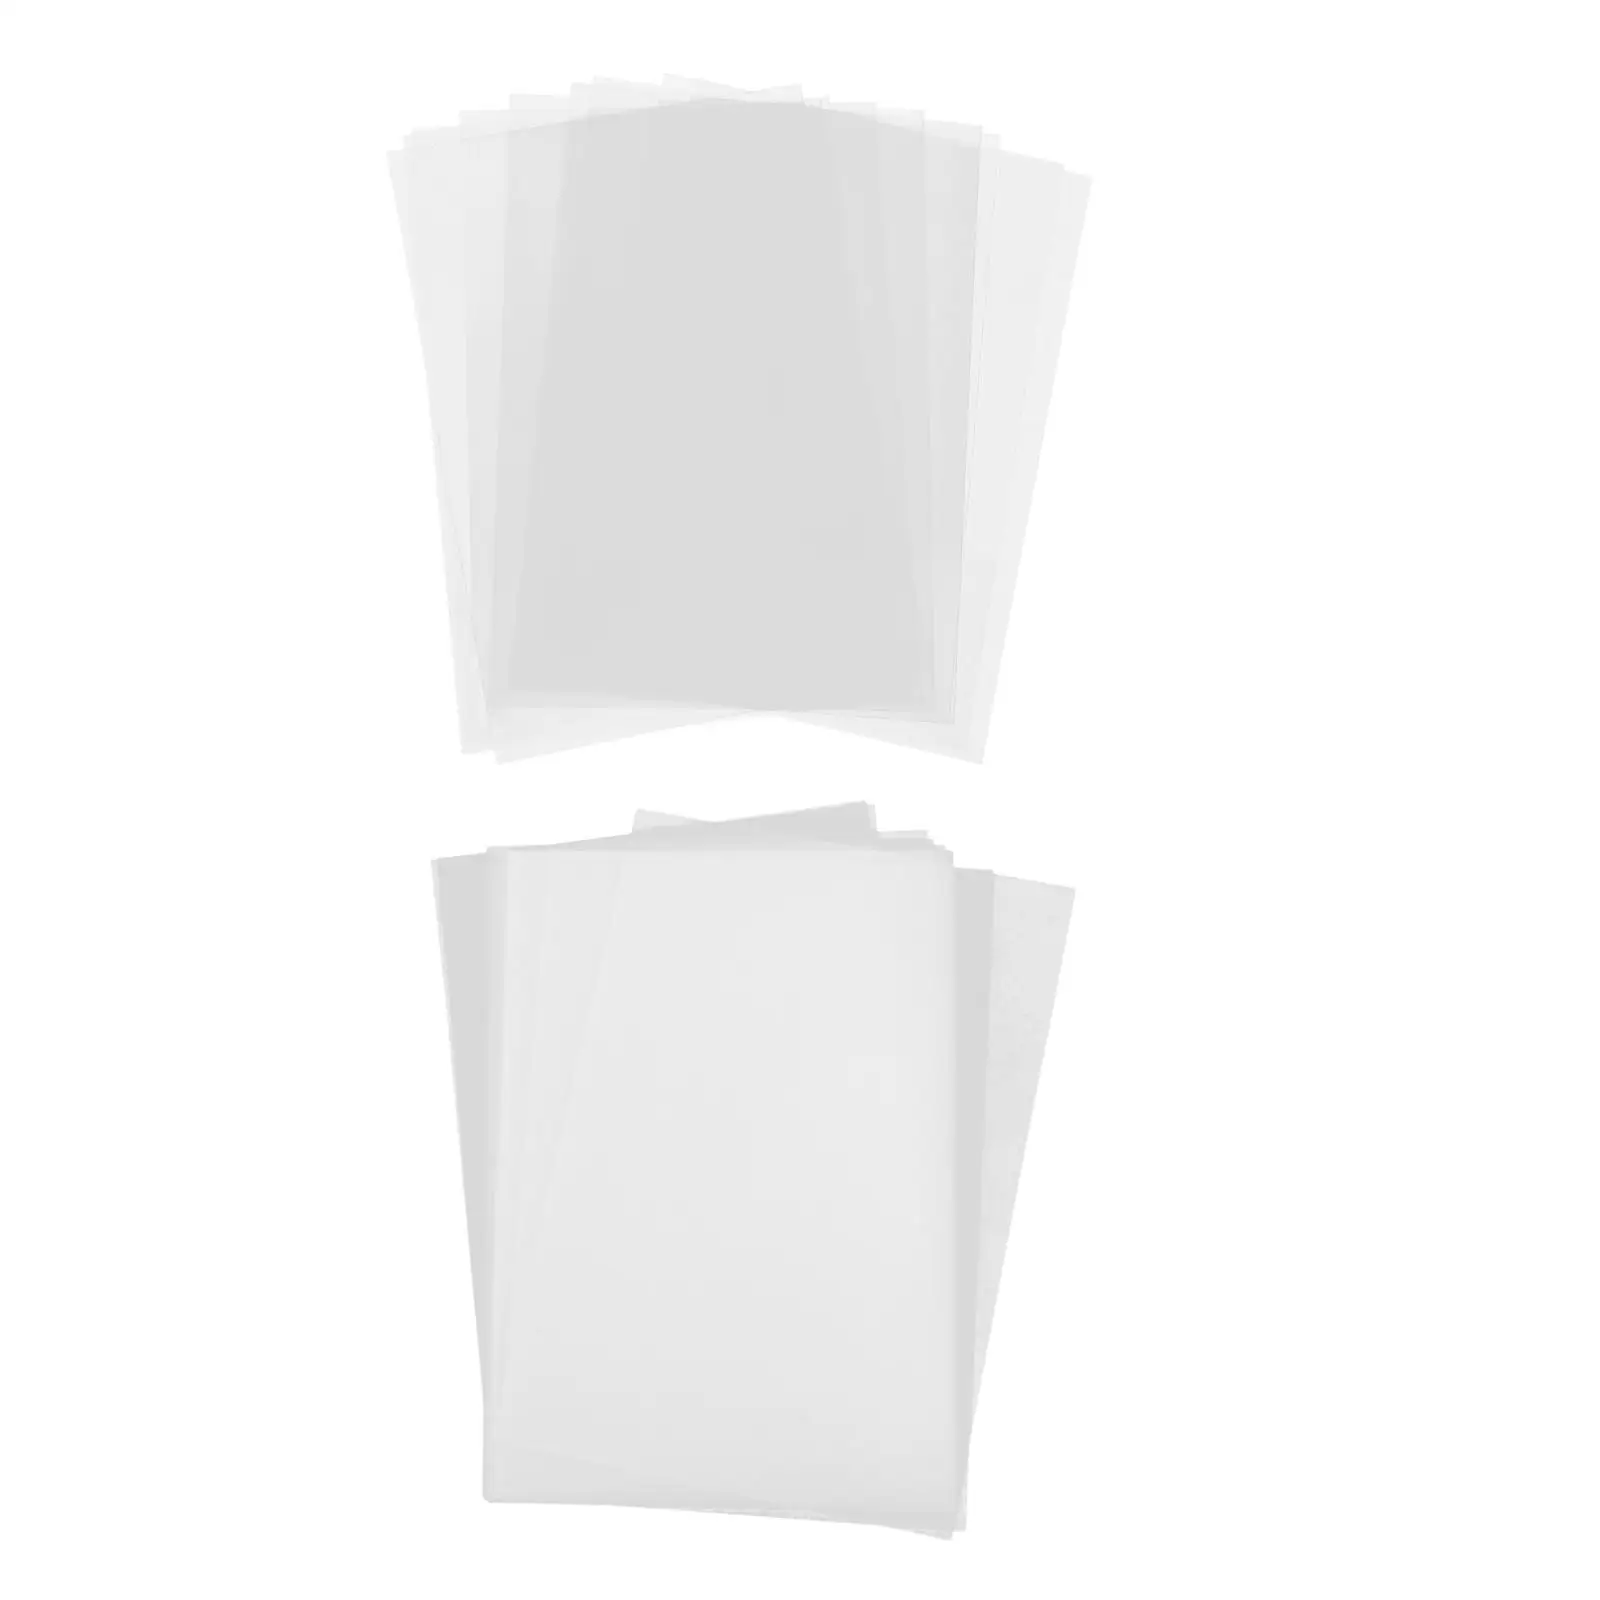 10x Heat Shrink Sheets, DIY Crafts Making Blank Film Paper Sheet Printable Heat Shrink